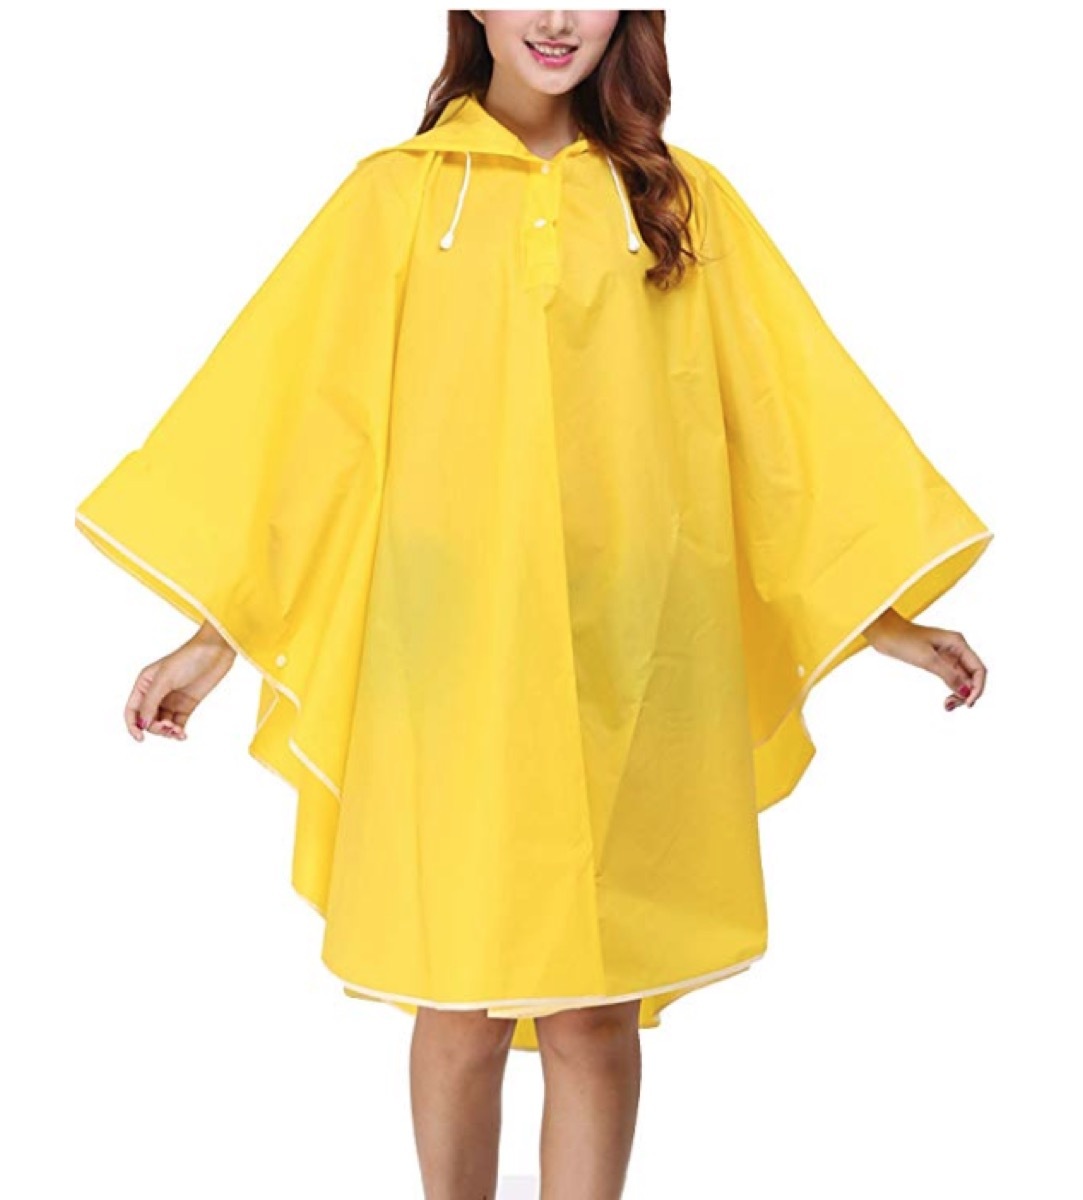 yellow rain poncho from doreyi